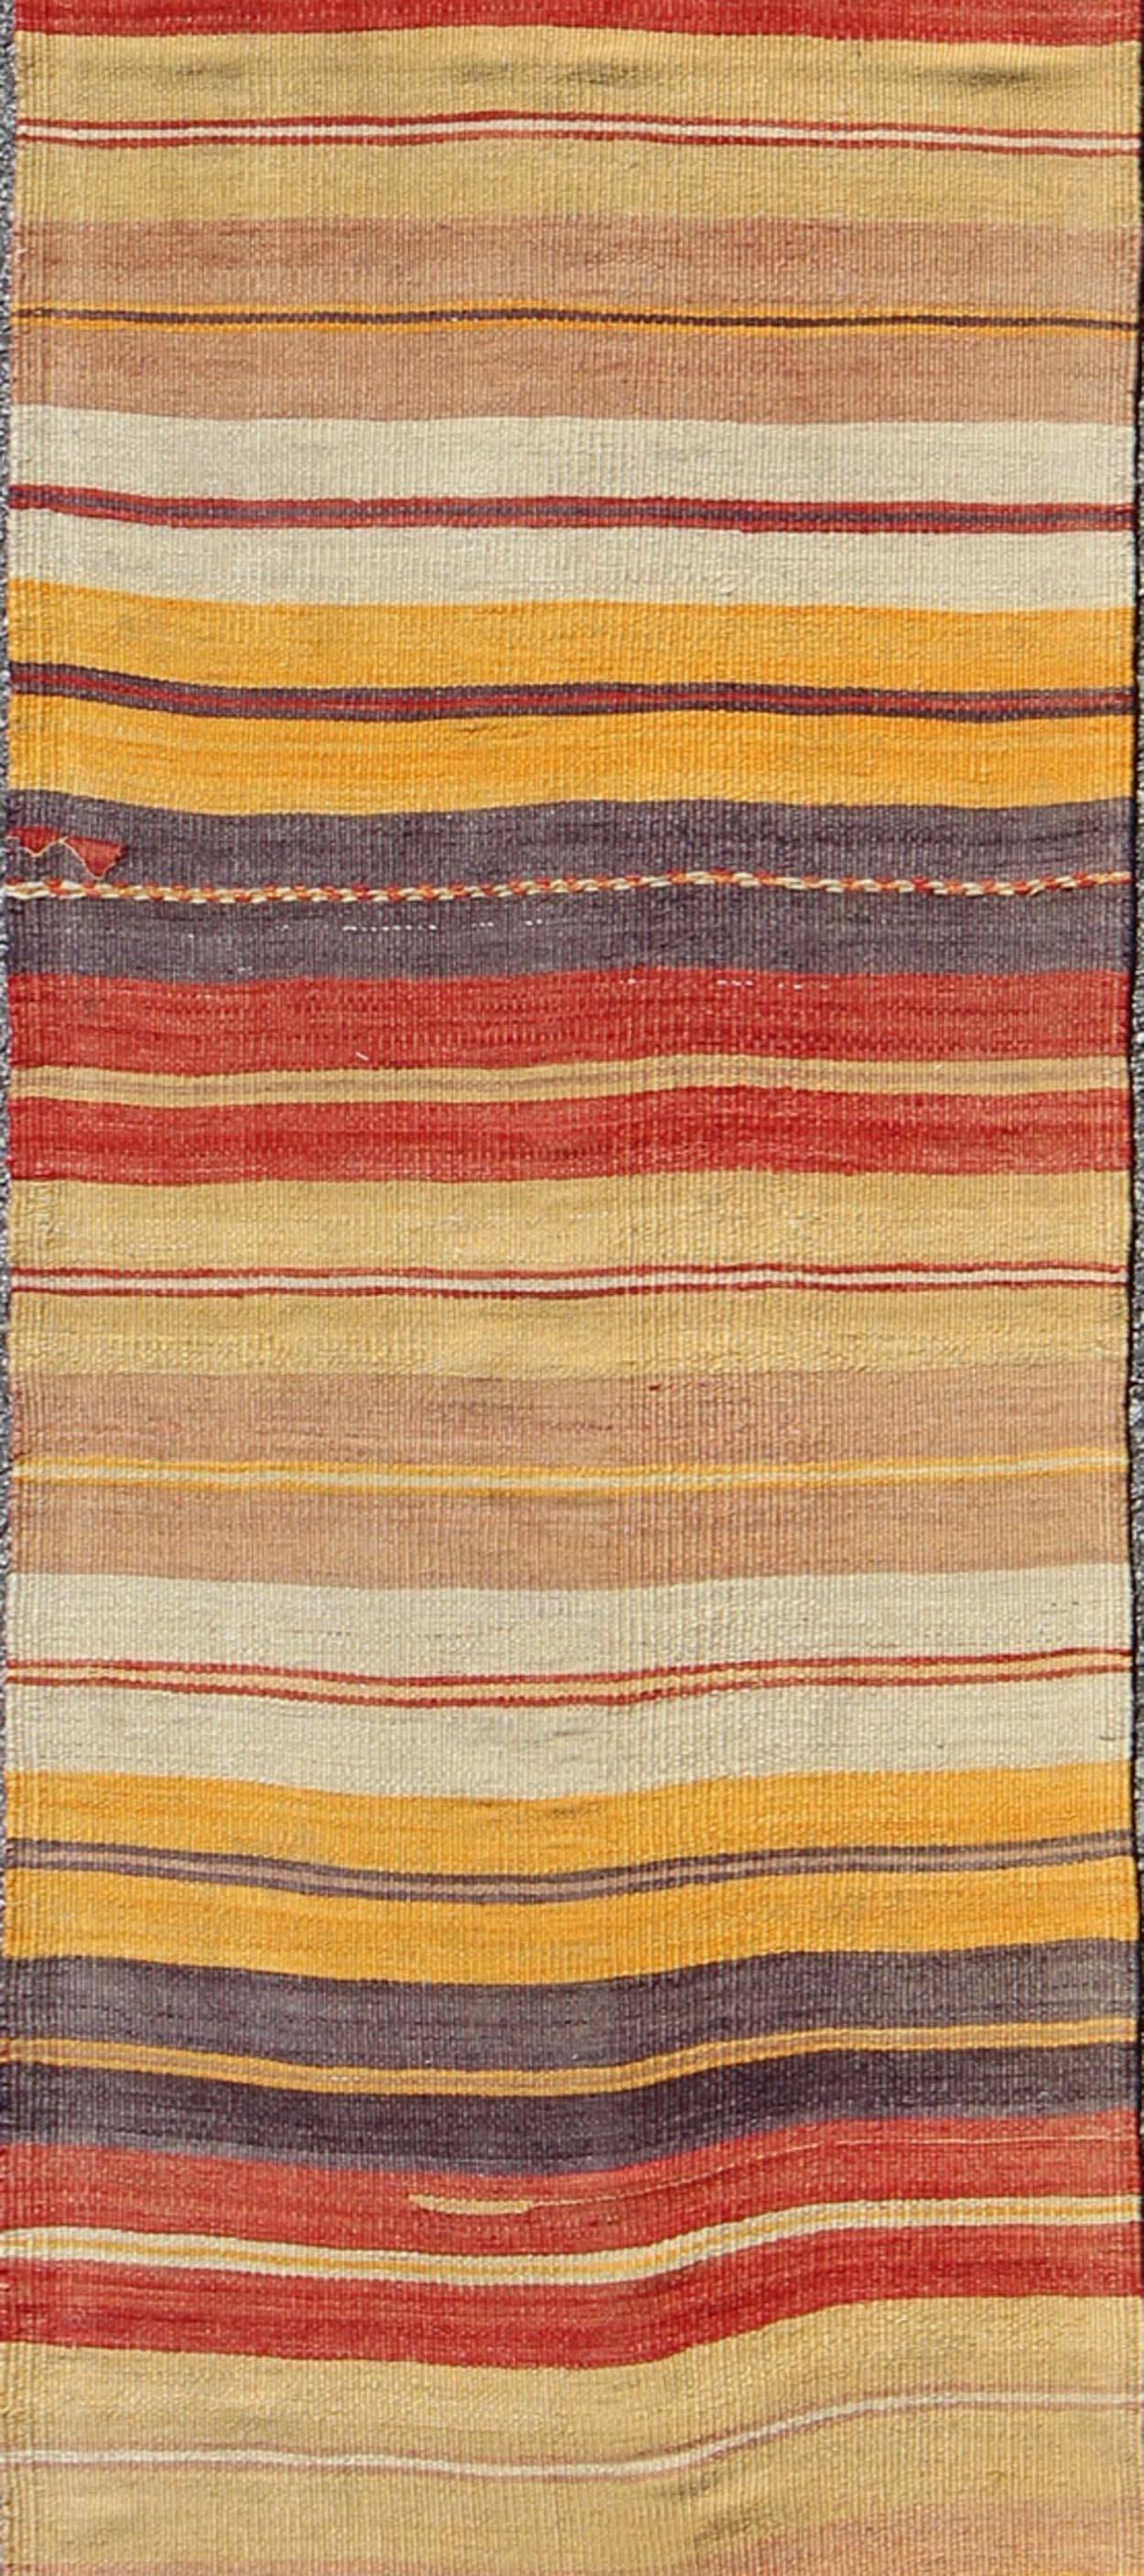 Hand-Woven Colorful Vintage Turkish Kilim Rug with Horizontal Stripe Design For Sale